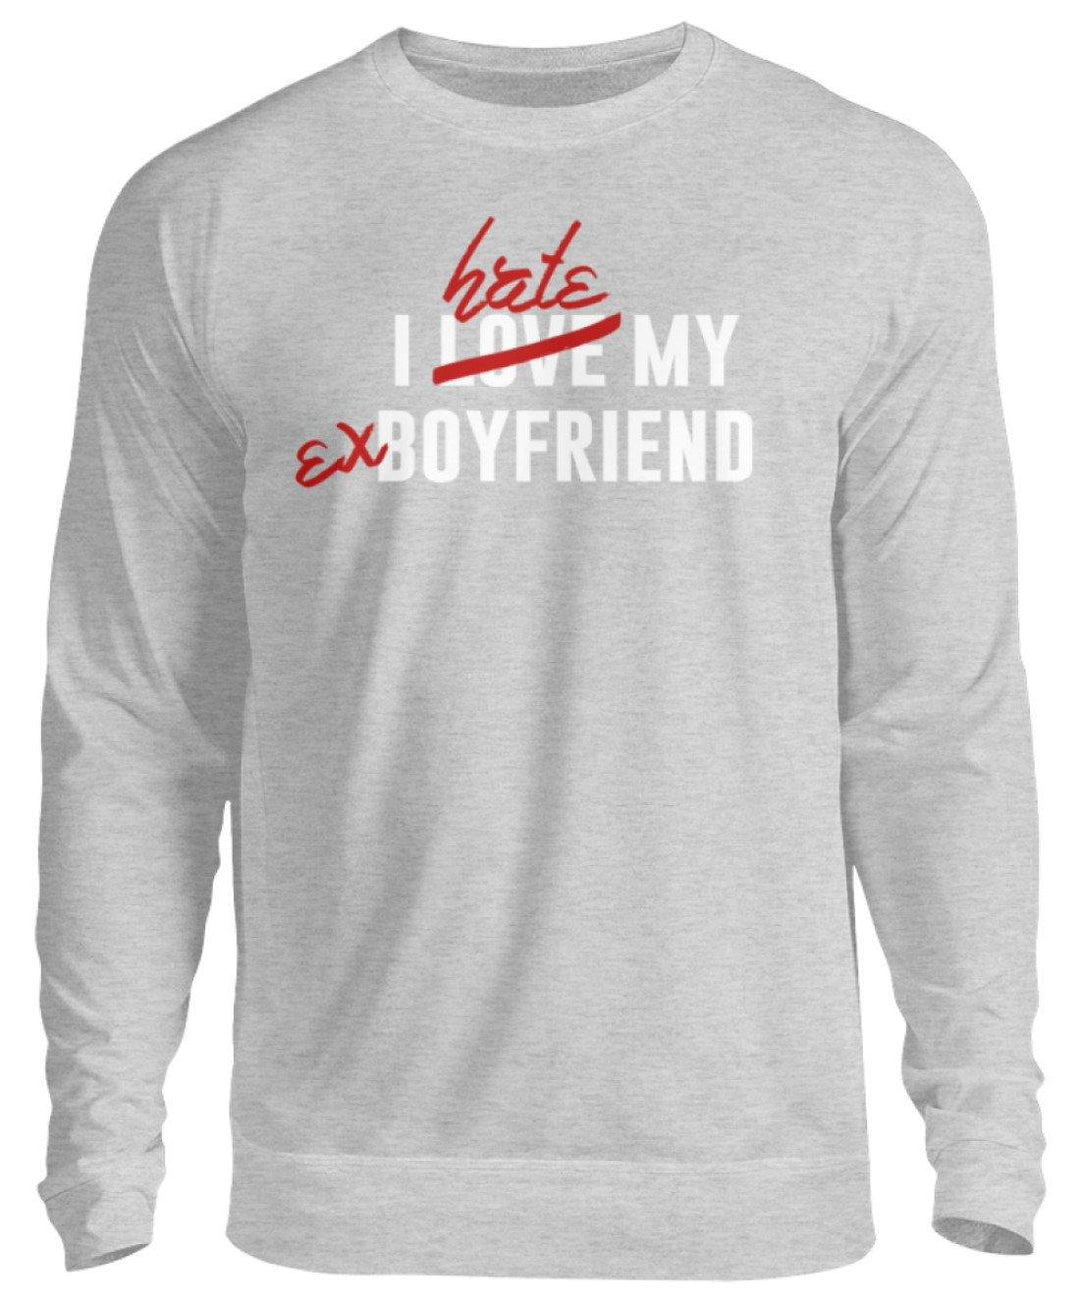 I Love My Boyfriend  - Unisex Pullover - Words on Shirts